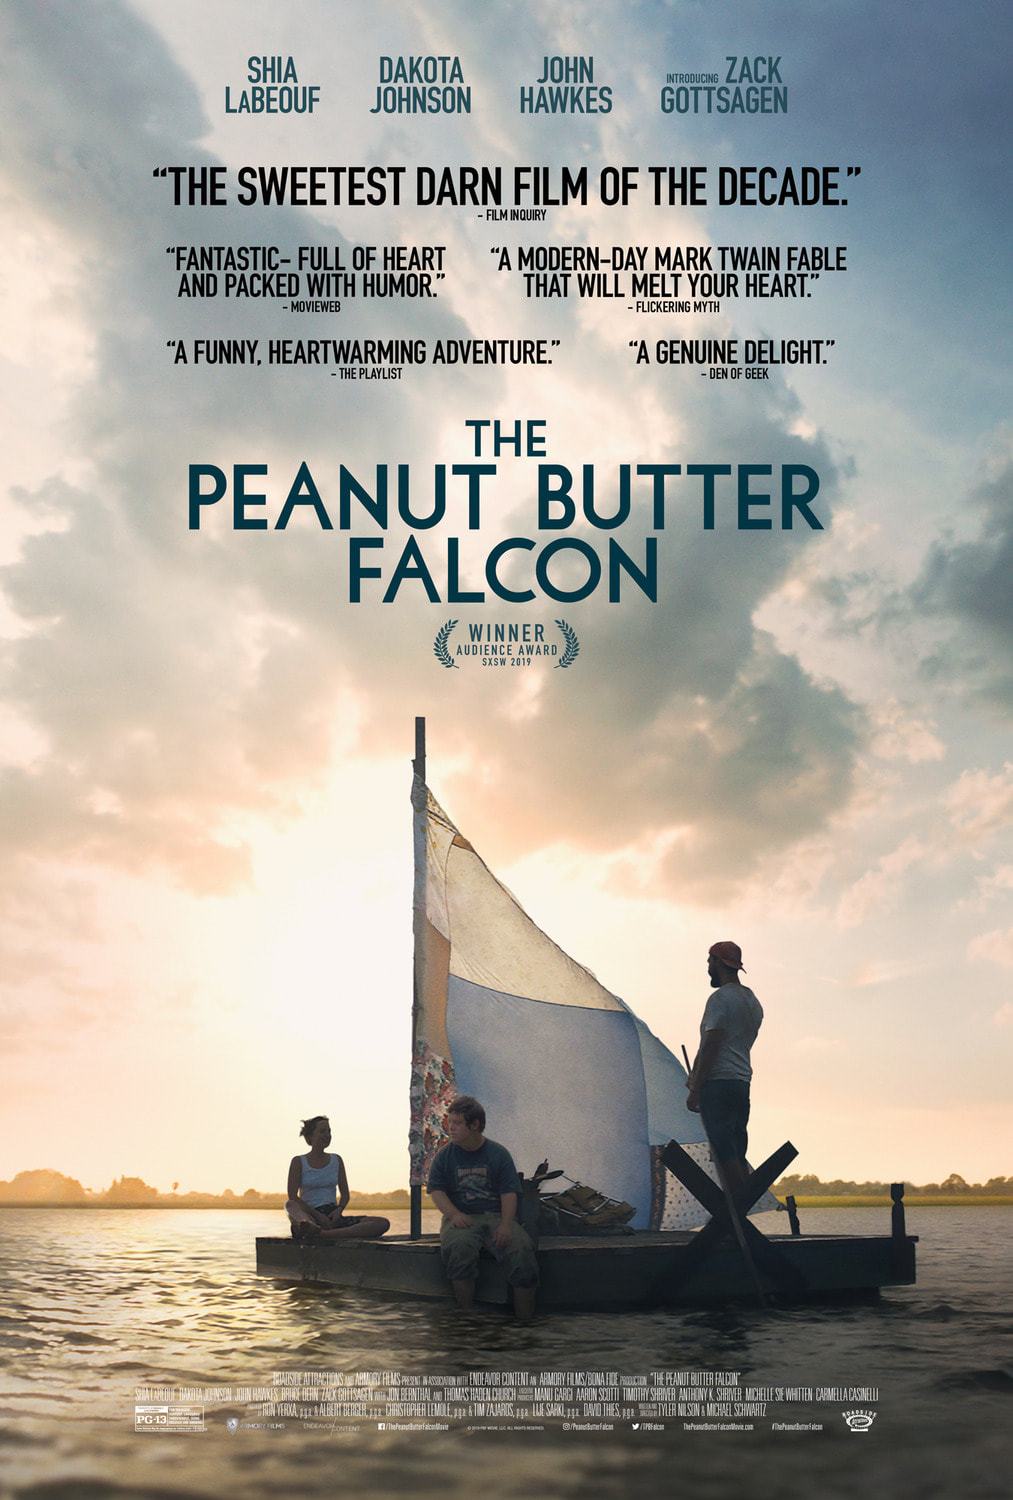 The Peanut Butter Falcom